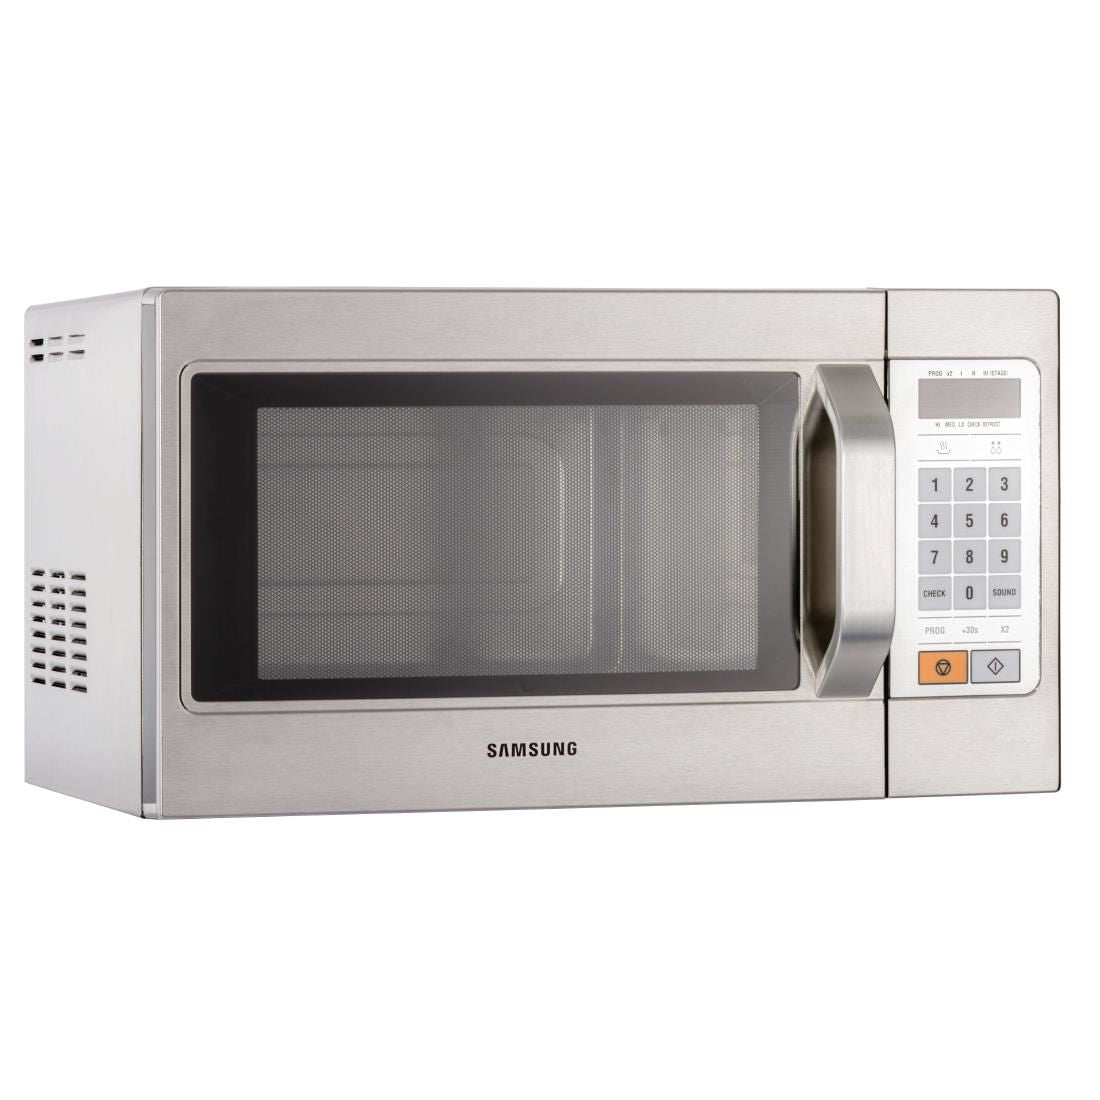 CB937 Samsung Light Duty Programmable Microwave 26ltr 1100W CM1089